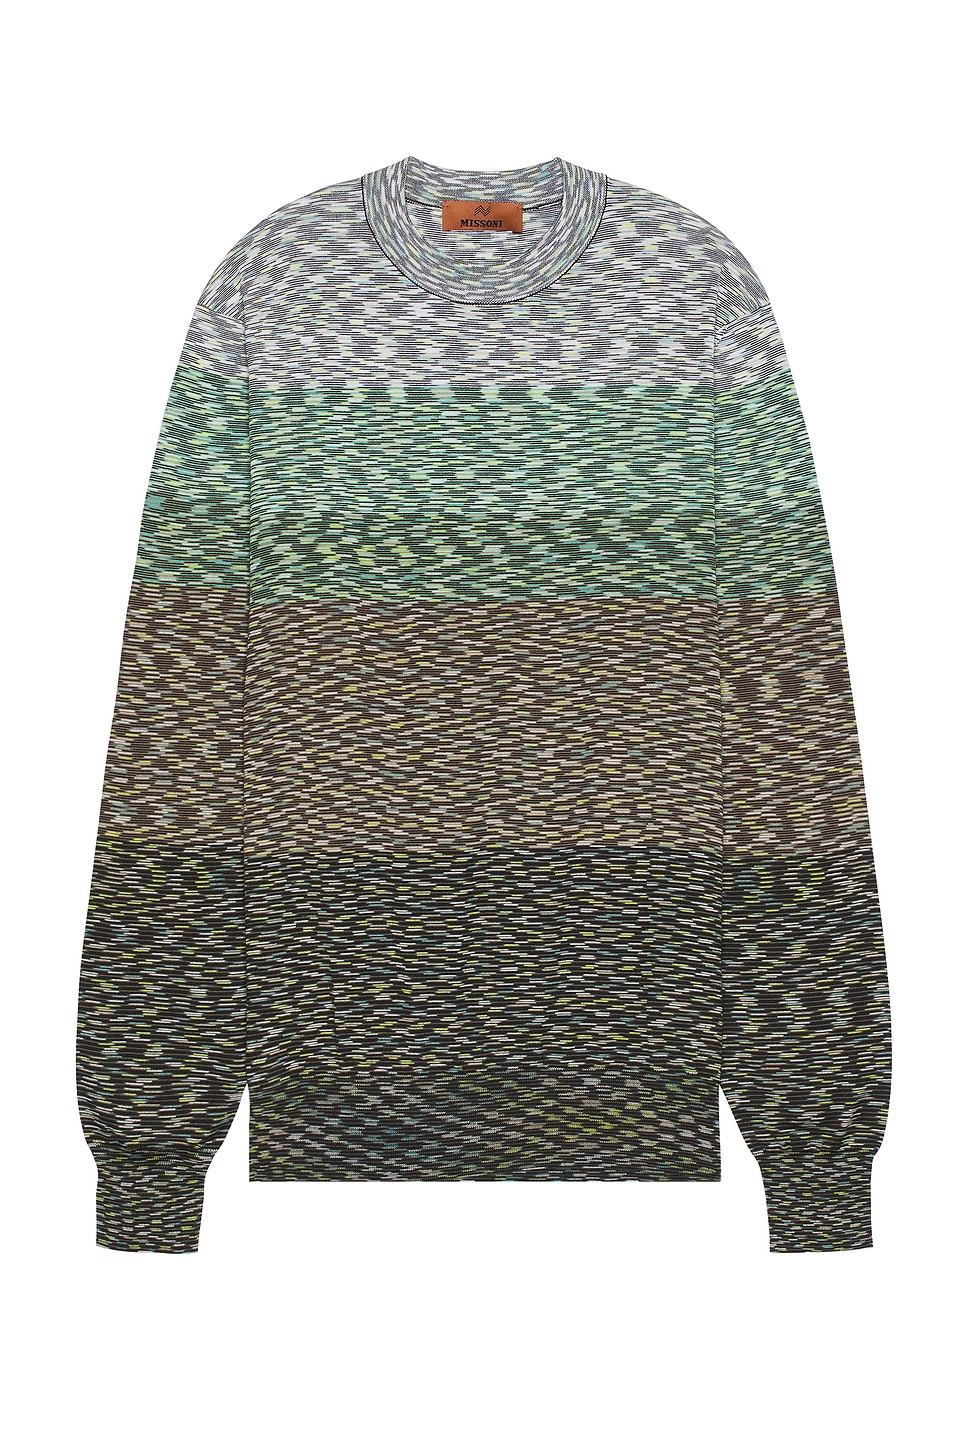 Image 1 of Missoni Crewneck Sweater in Beige & Green